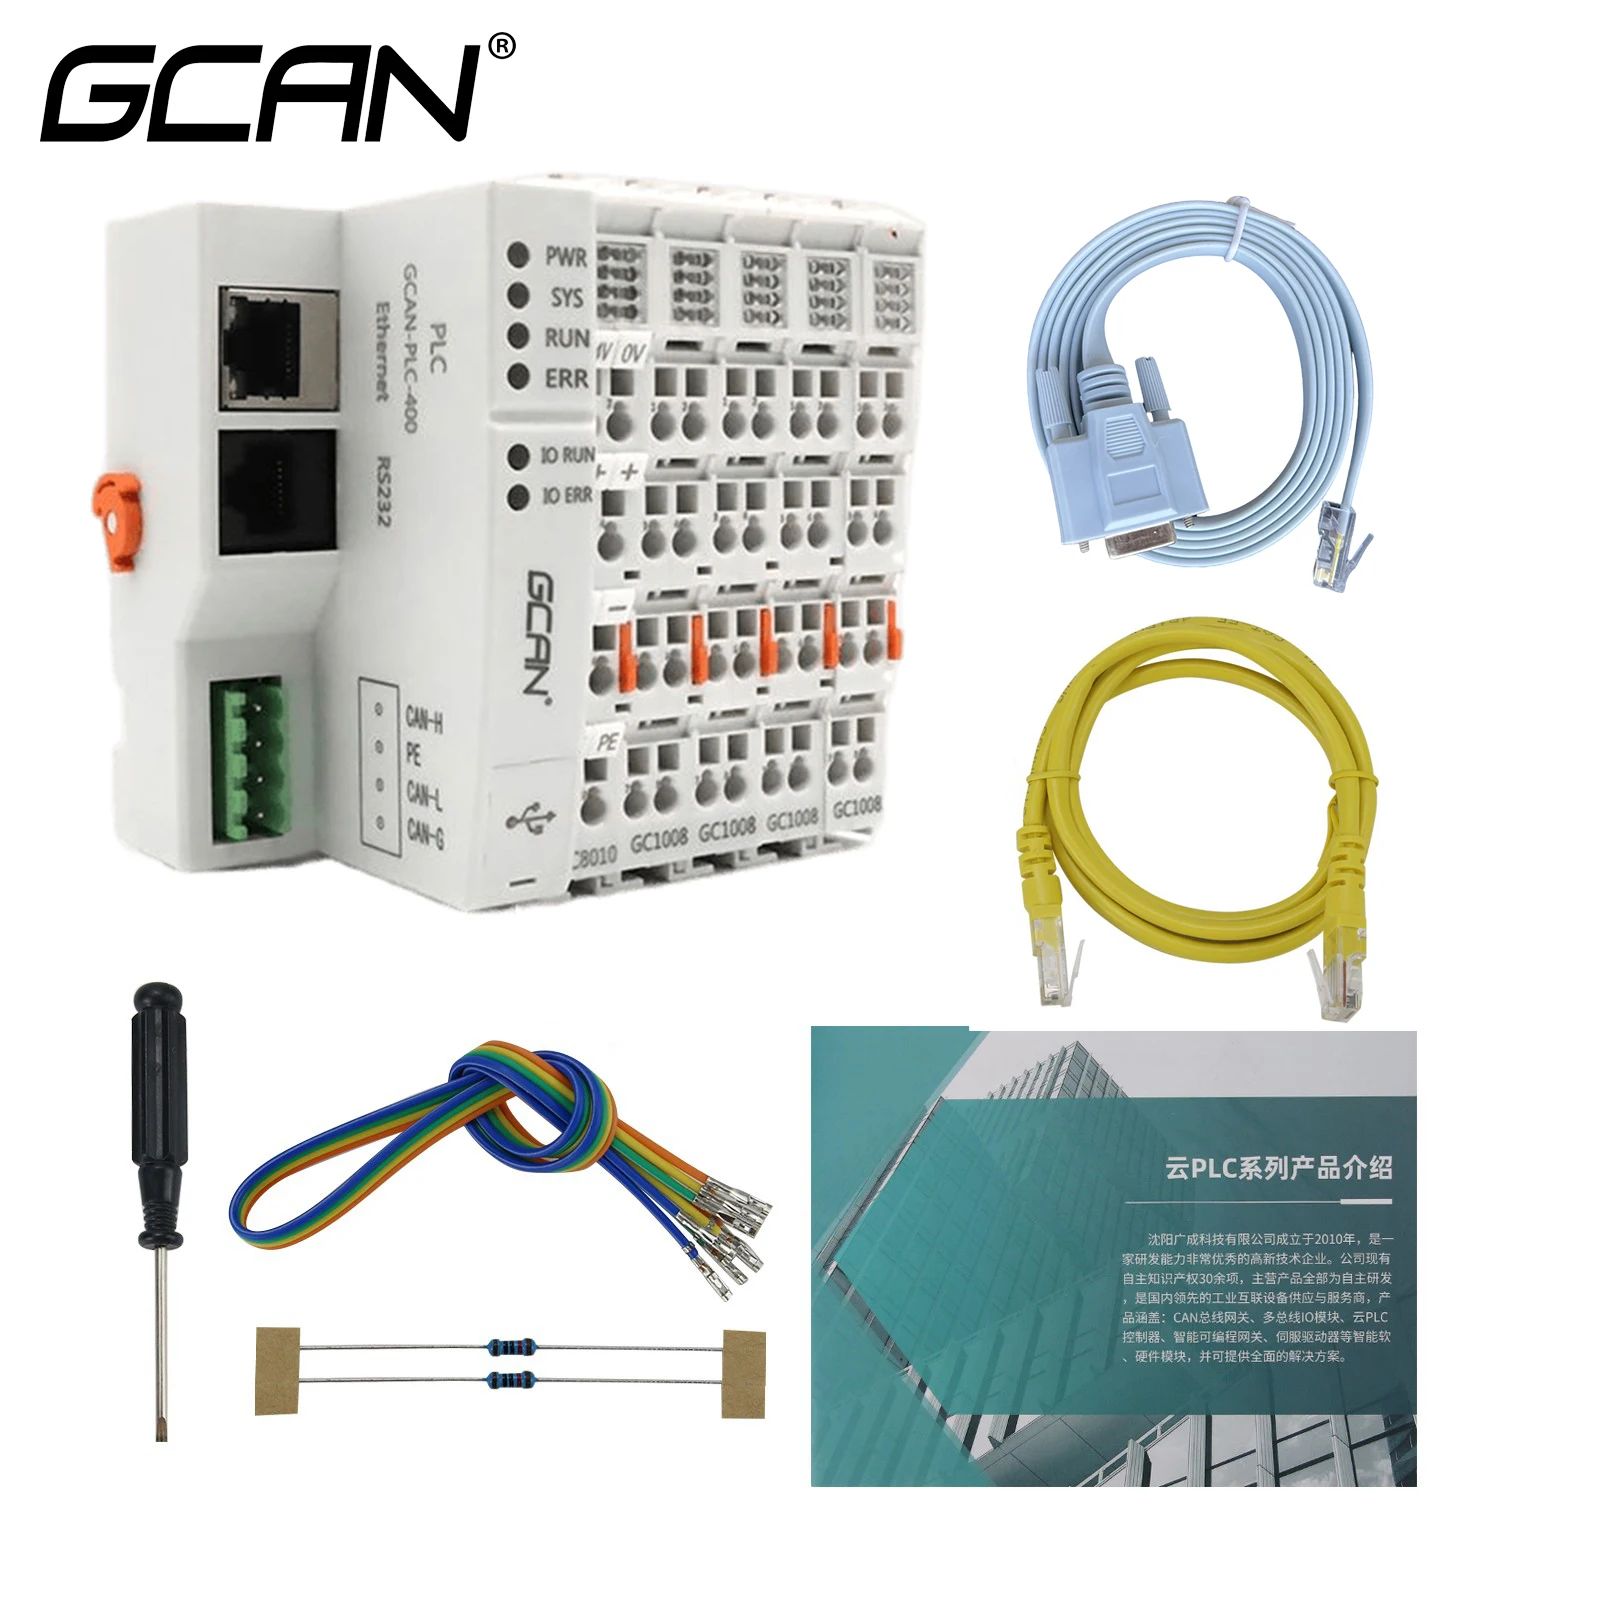 GCAN מהנדס ספציפי PLC תומך Codesys שפת תכנות והוא יכול להיות מחובר HMI היגיון לתכנות בקר PLC - 5